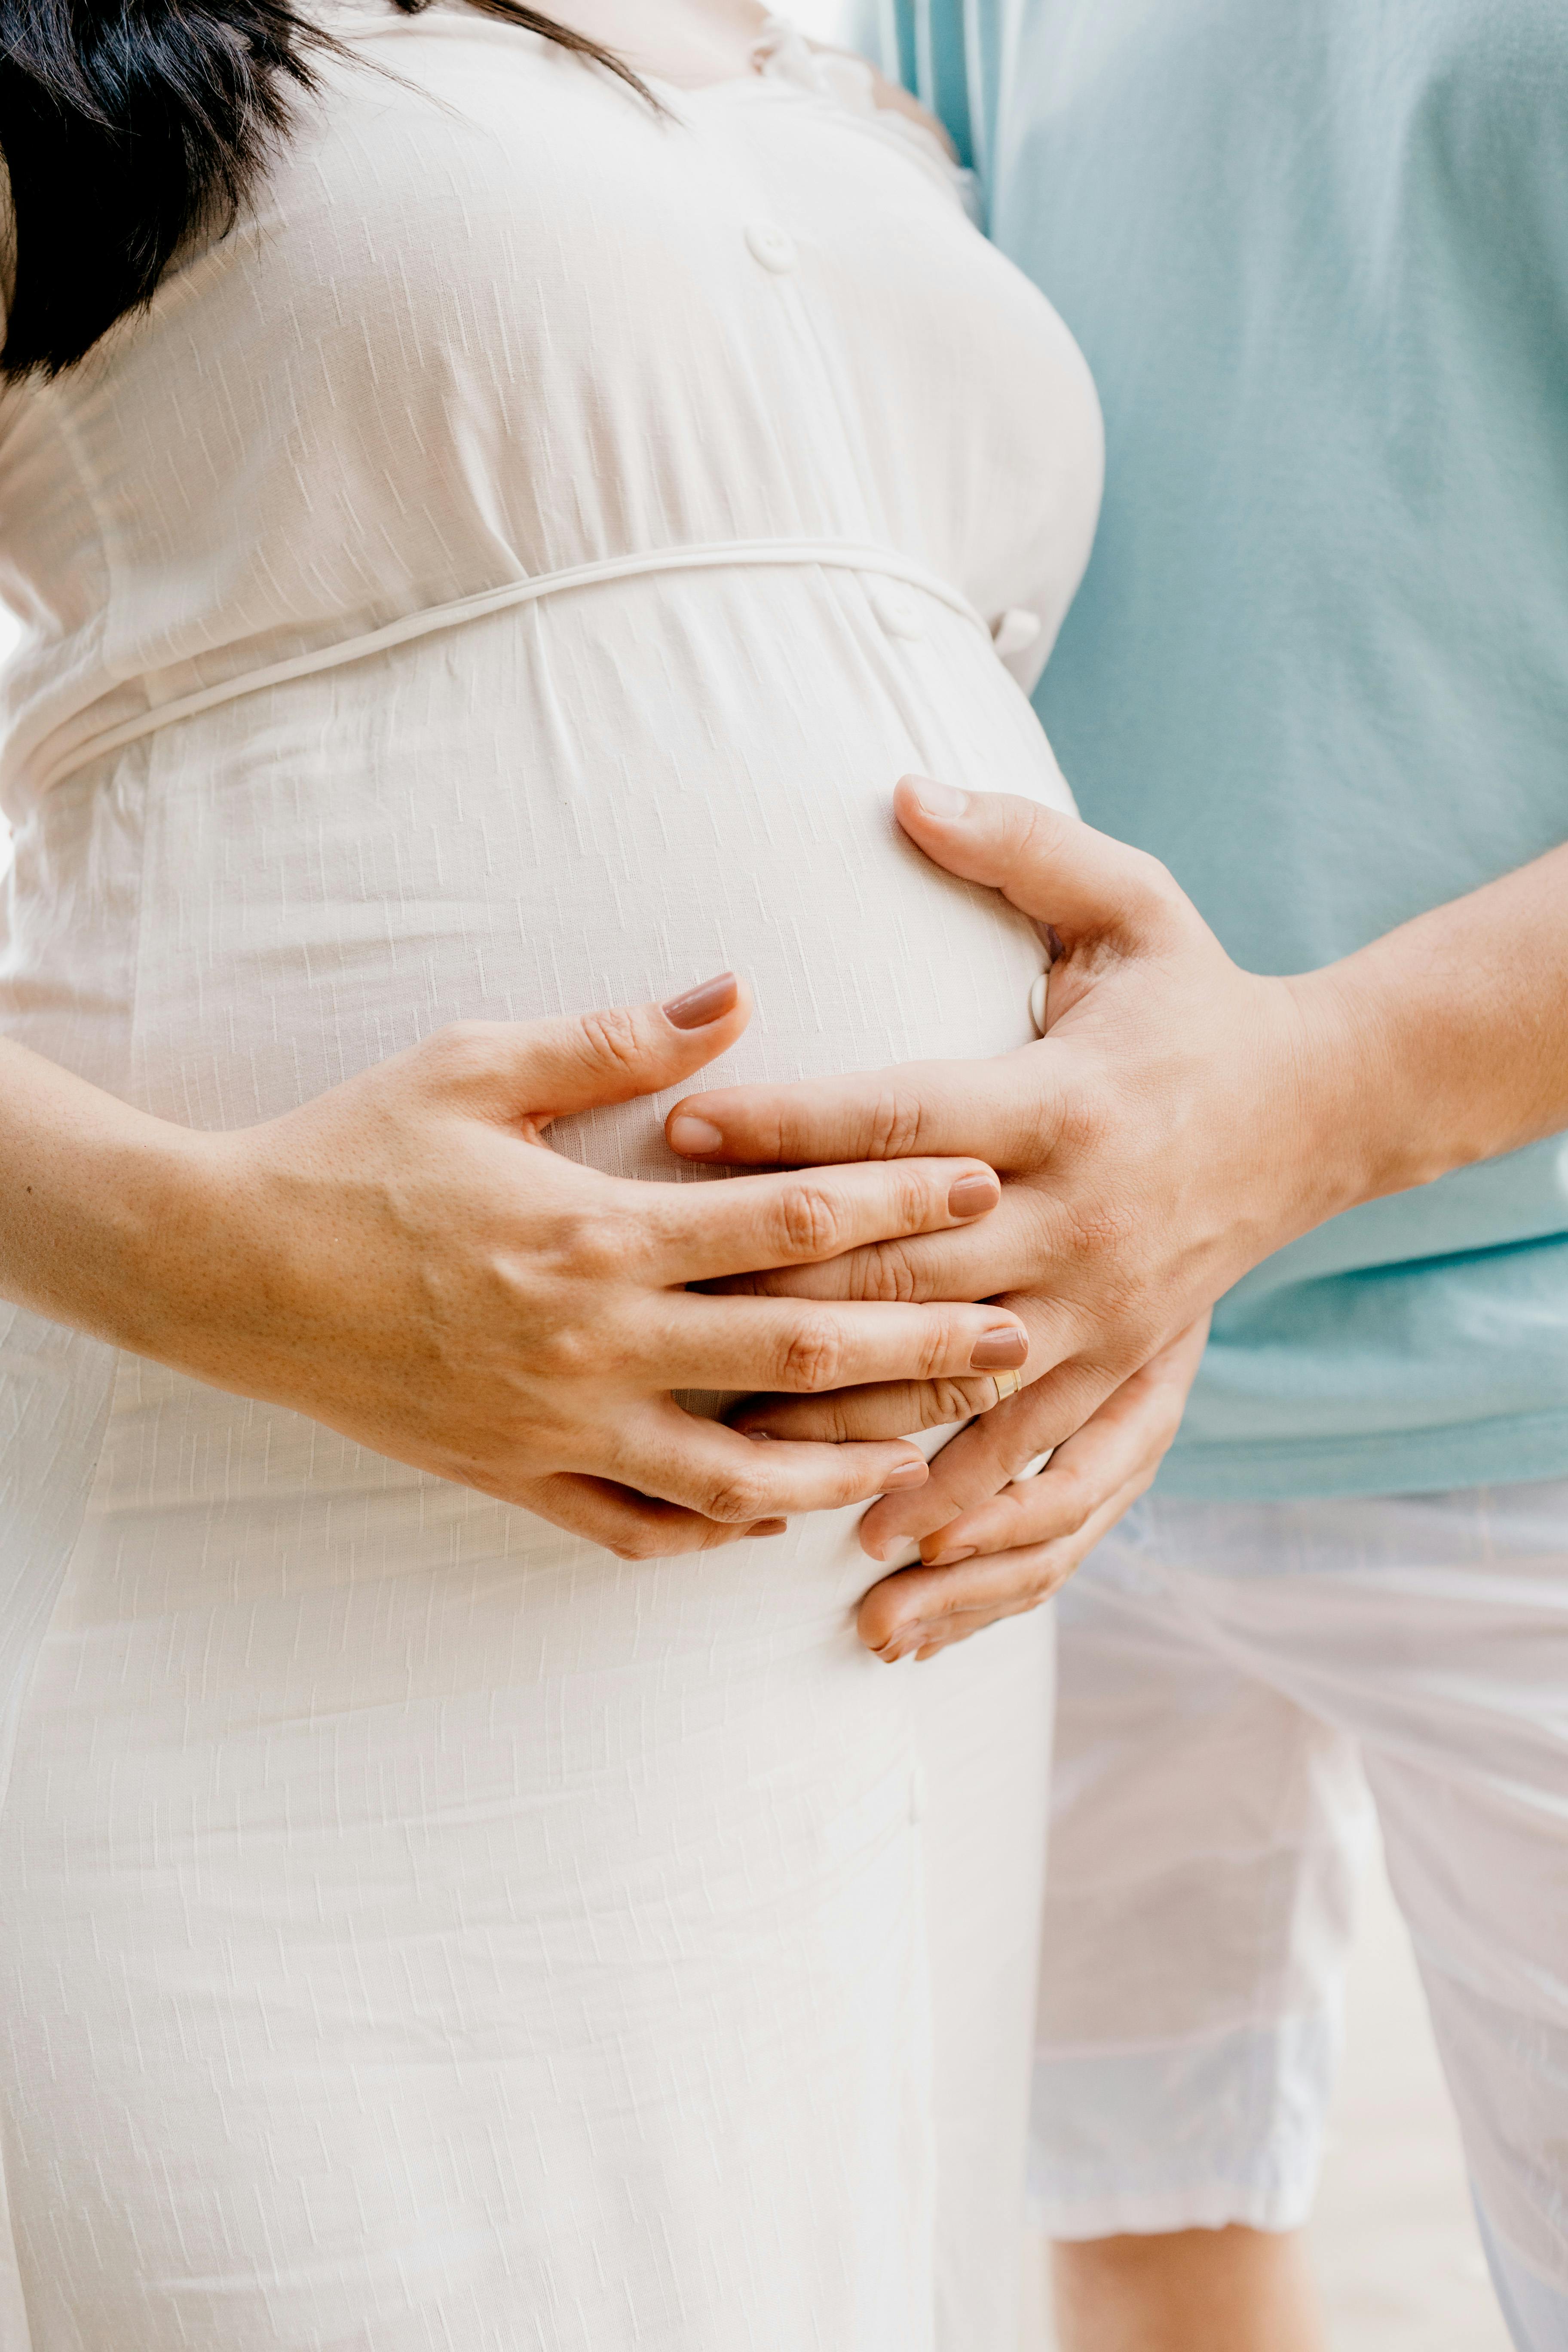 Un hombre sujeta el estómago de una mujer embarazada | Foto: Pexels